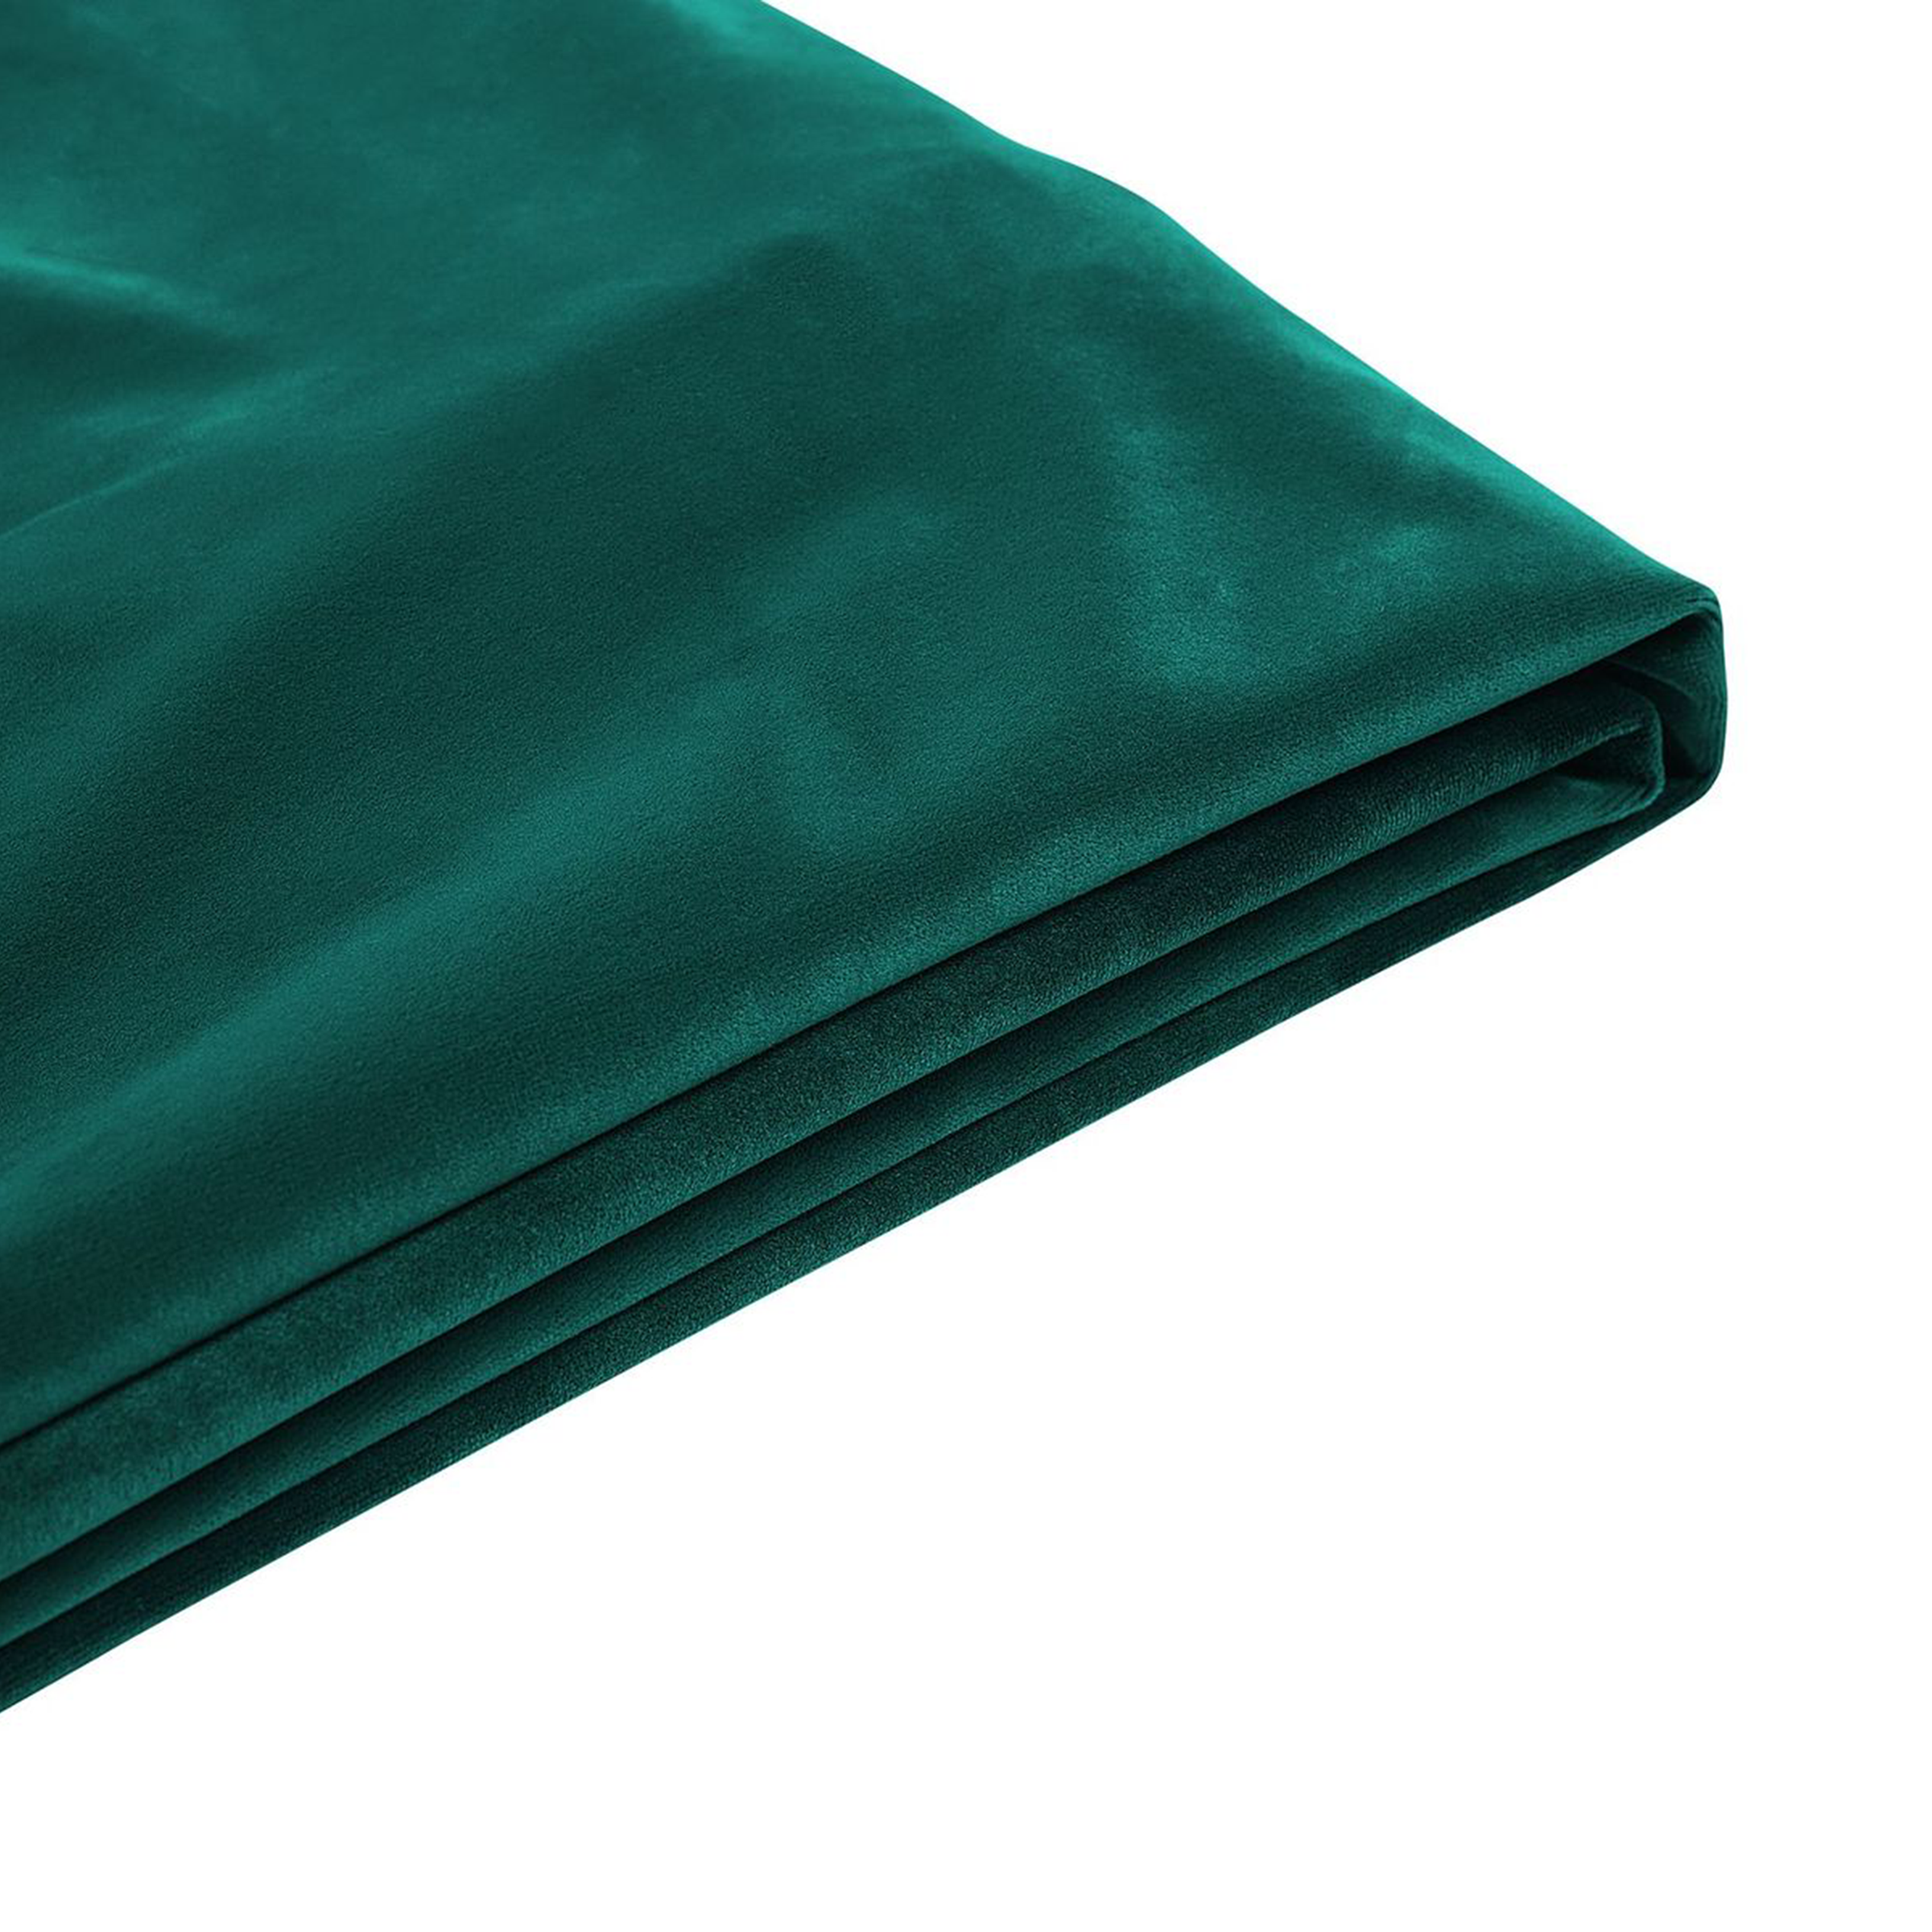 Beliani Bed Frame Cover Green Velvet for Bed 160 x 200 cm Removable Washable